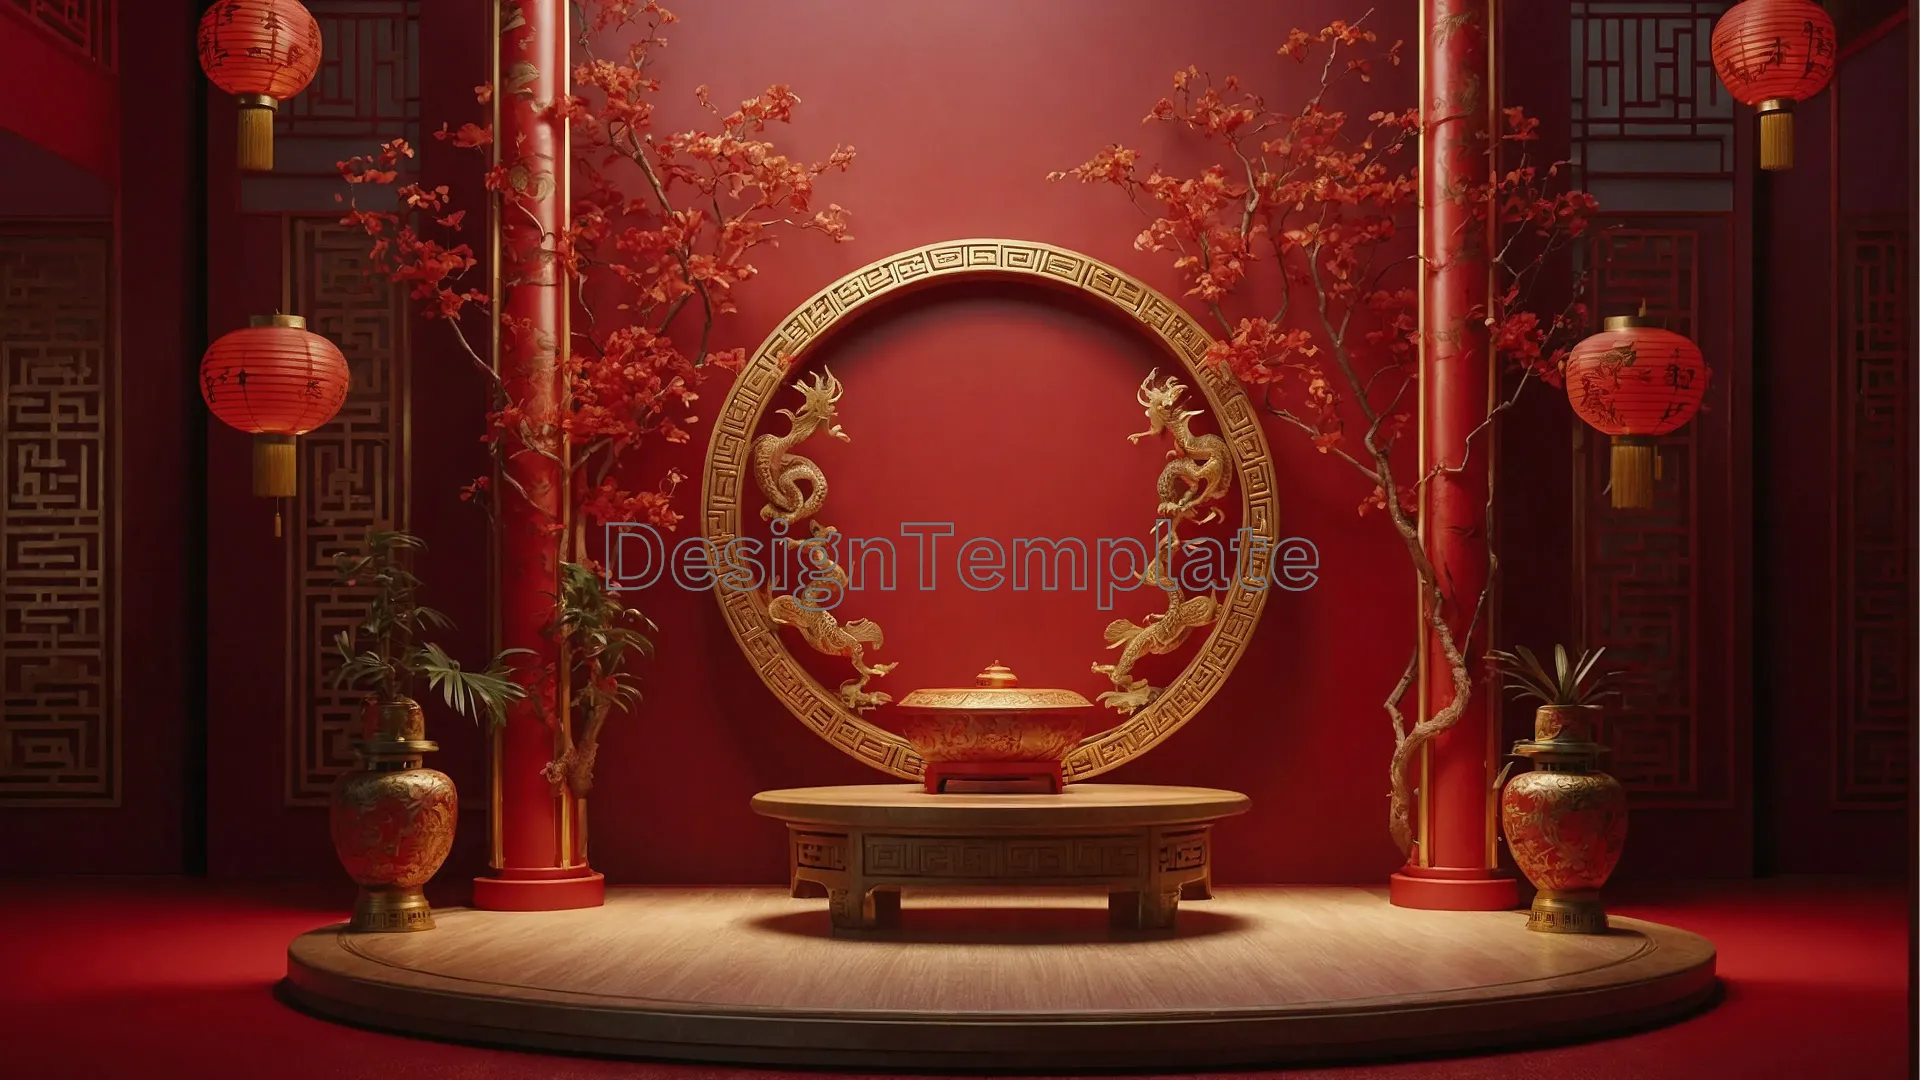 Dragon Embrace Podium Ornate Design Image image